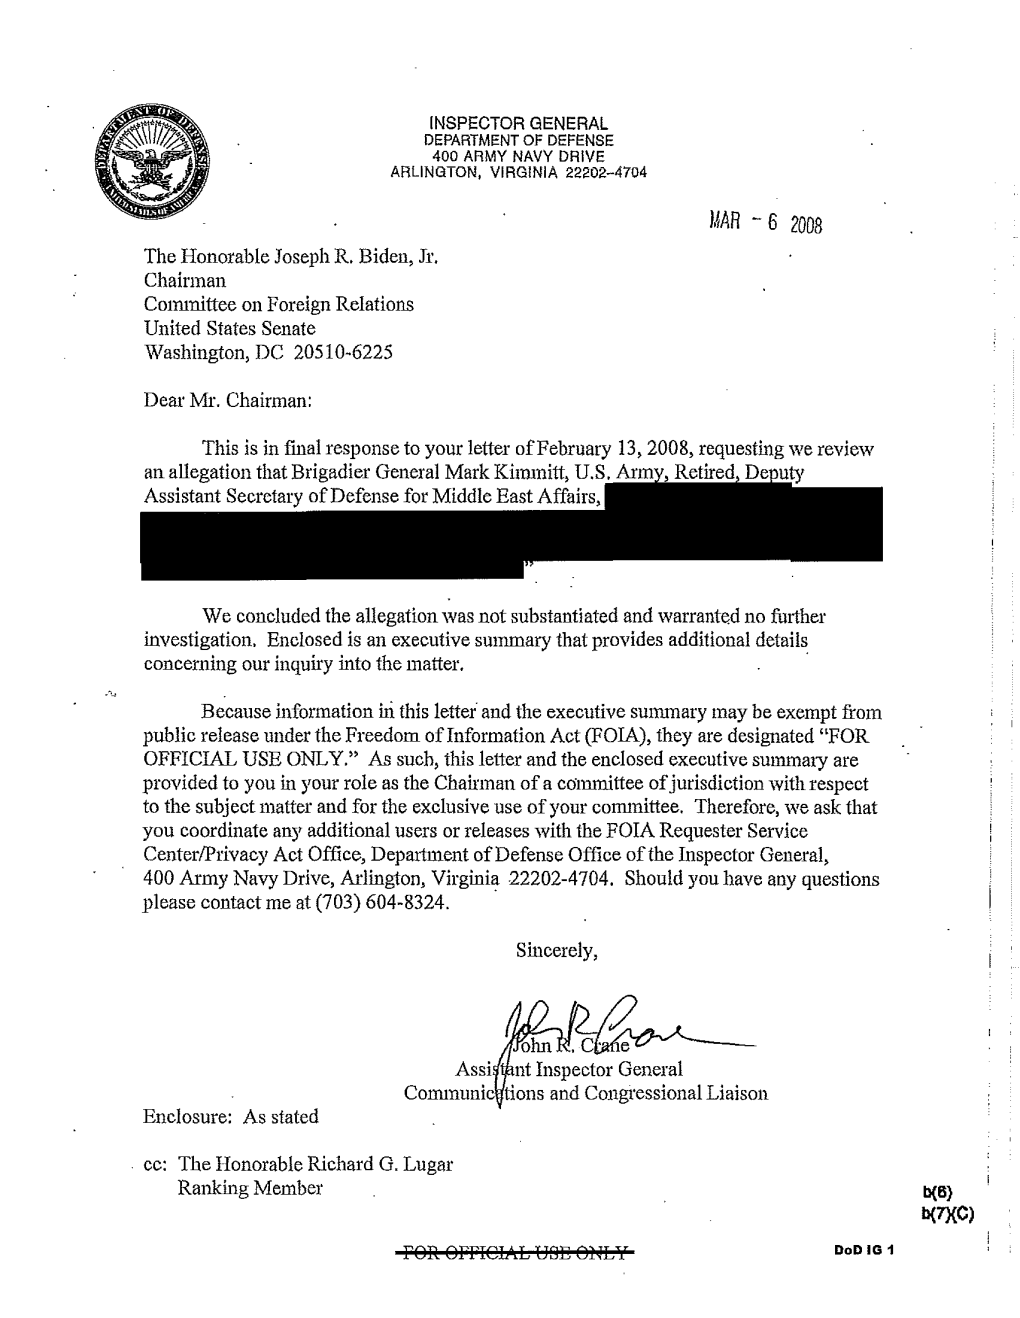 Inquiry Into an Allegation Involving Brigadier General Mark T. Kimmitt, U.S